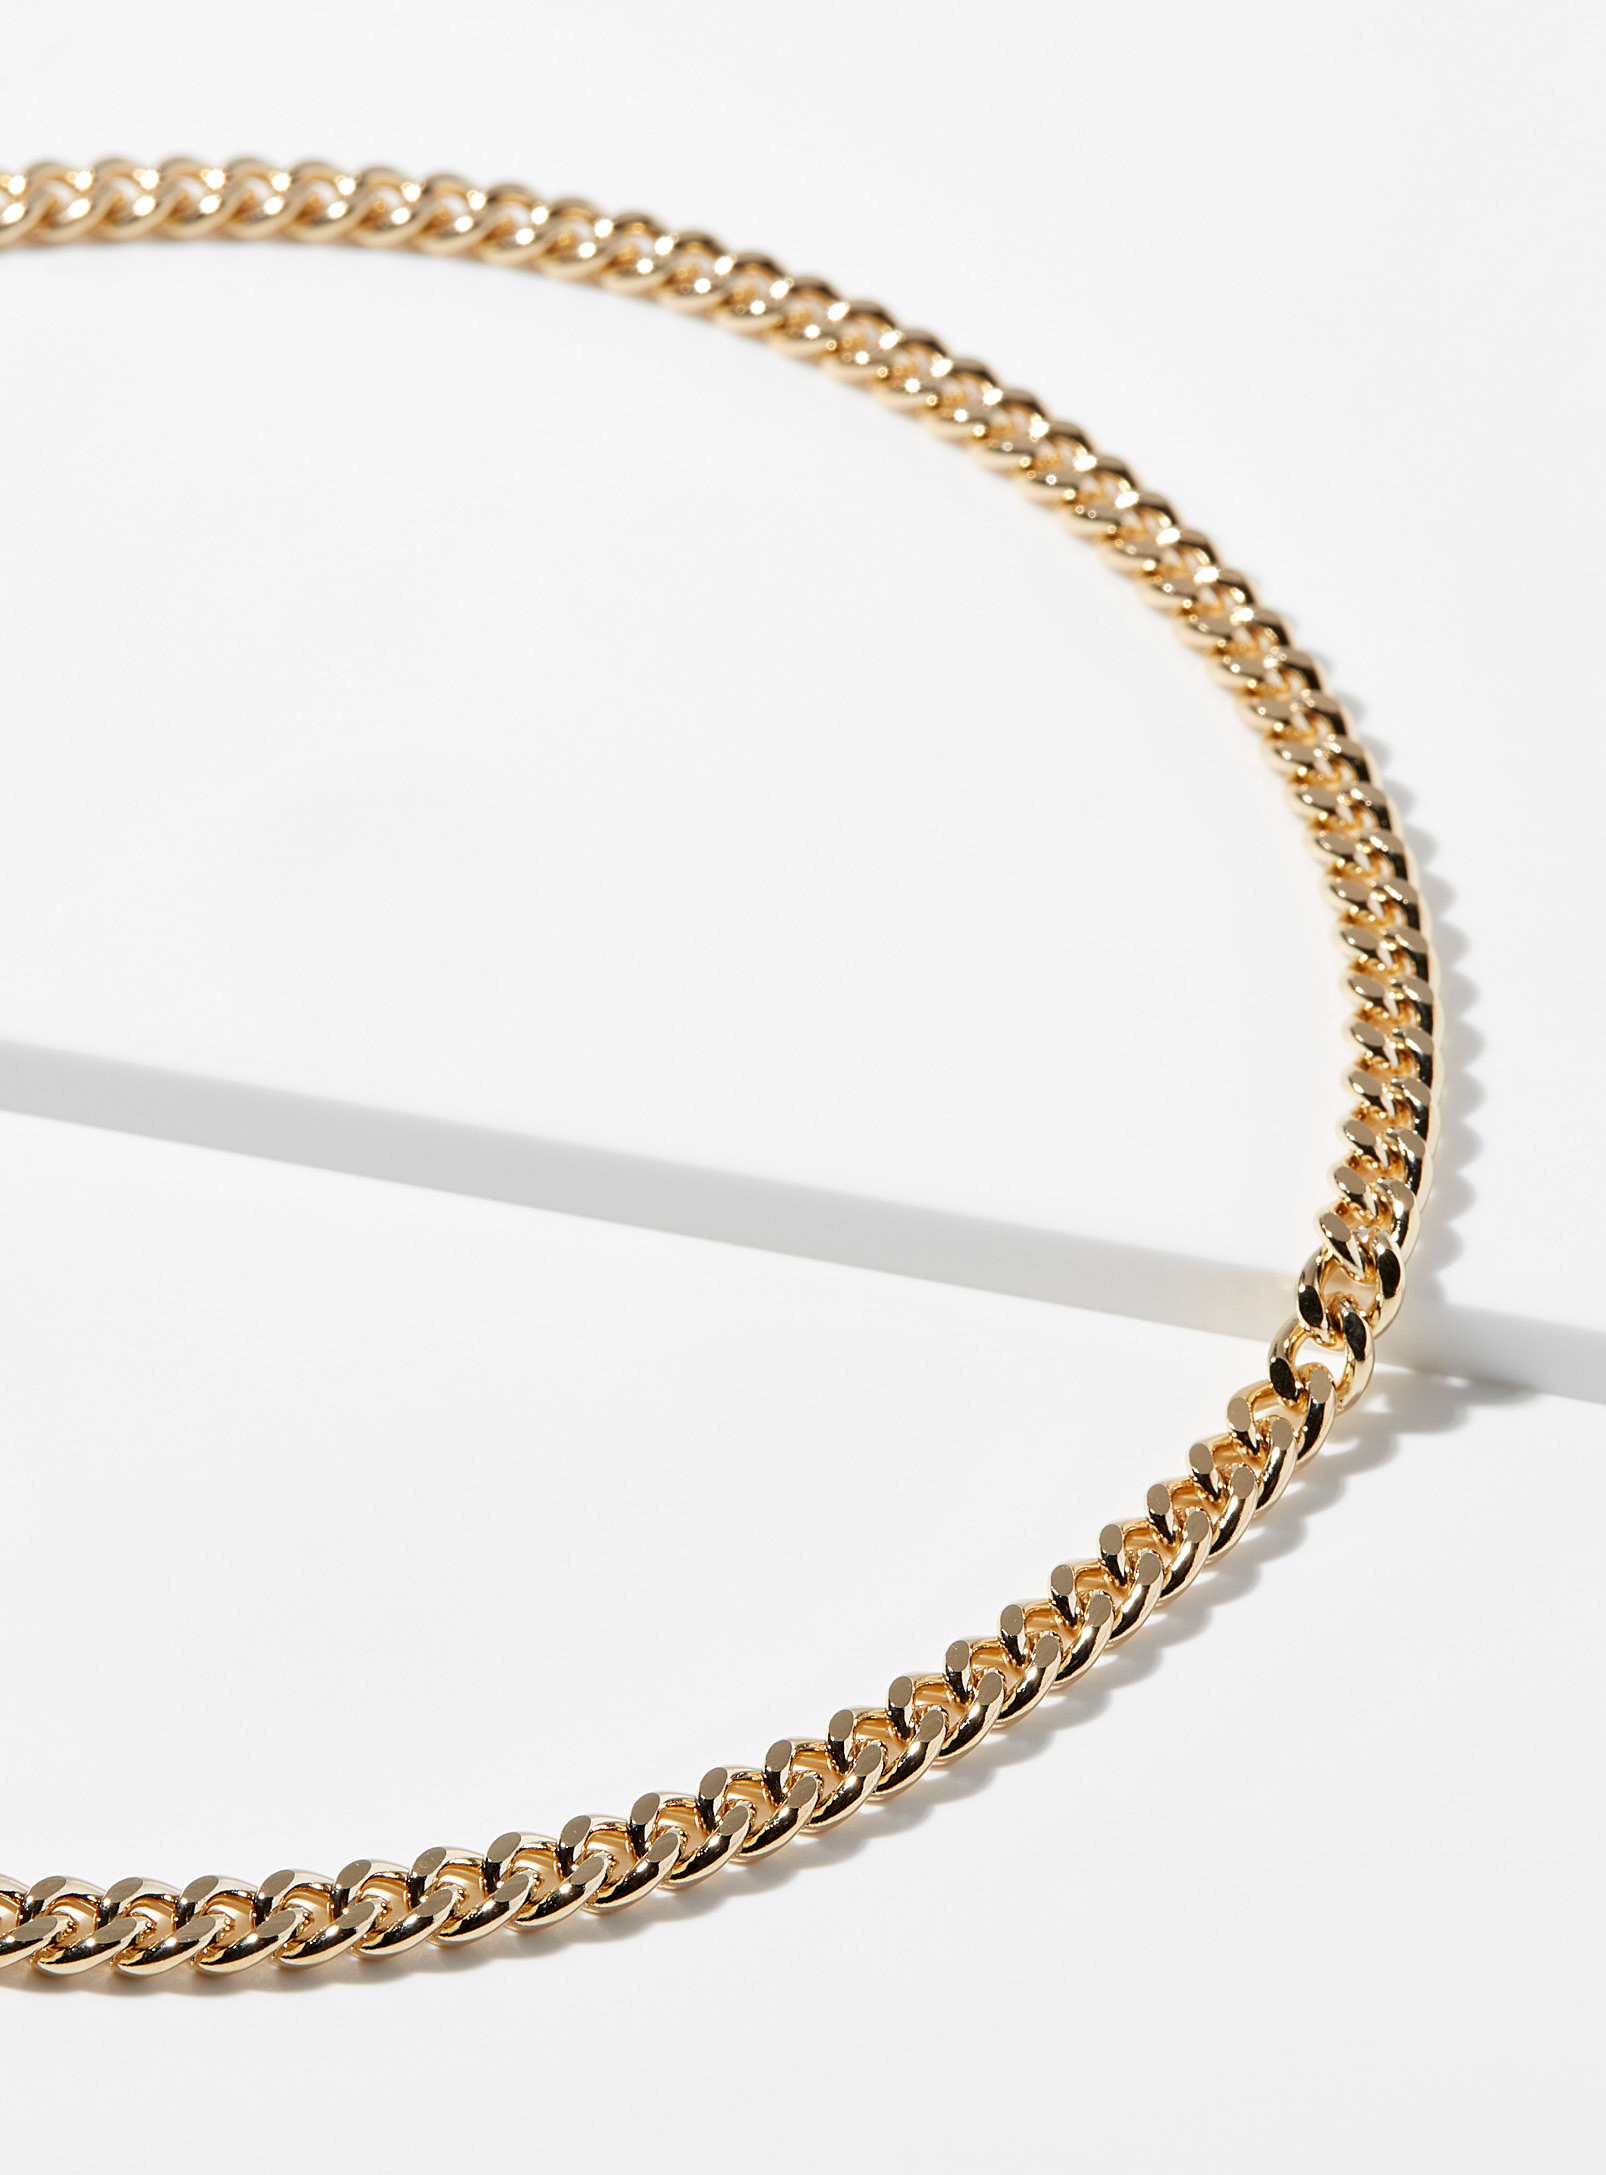 Simons - Women's Curb-link chain necklace